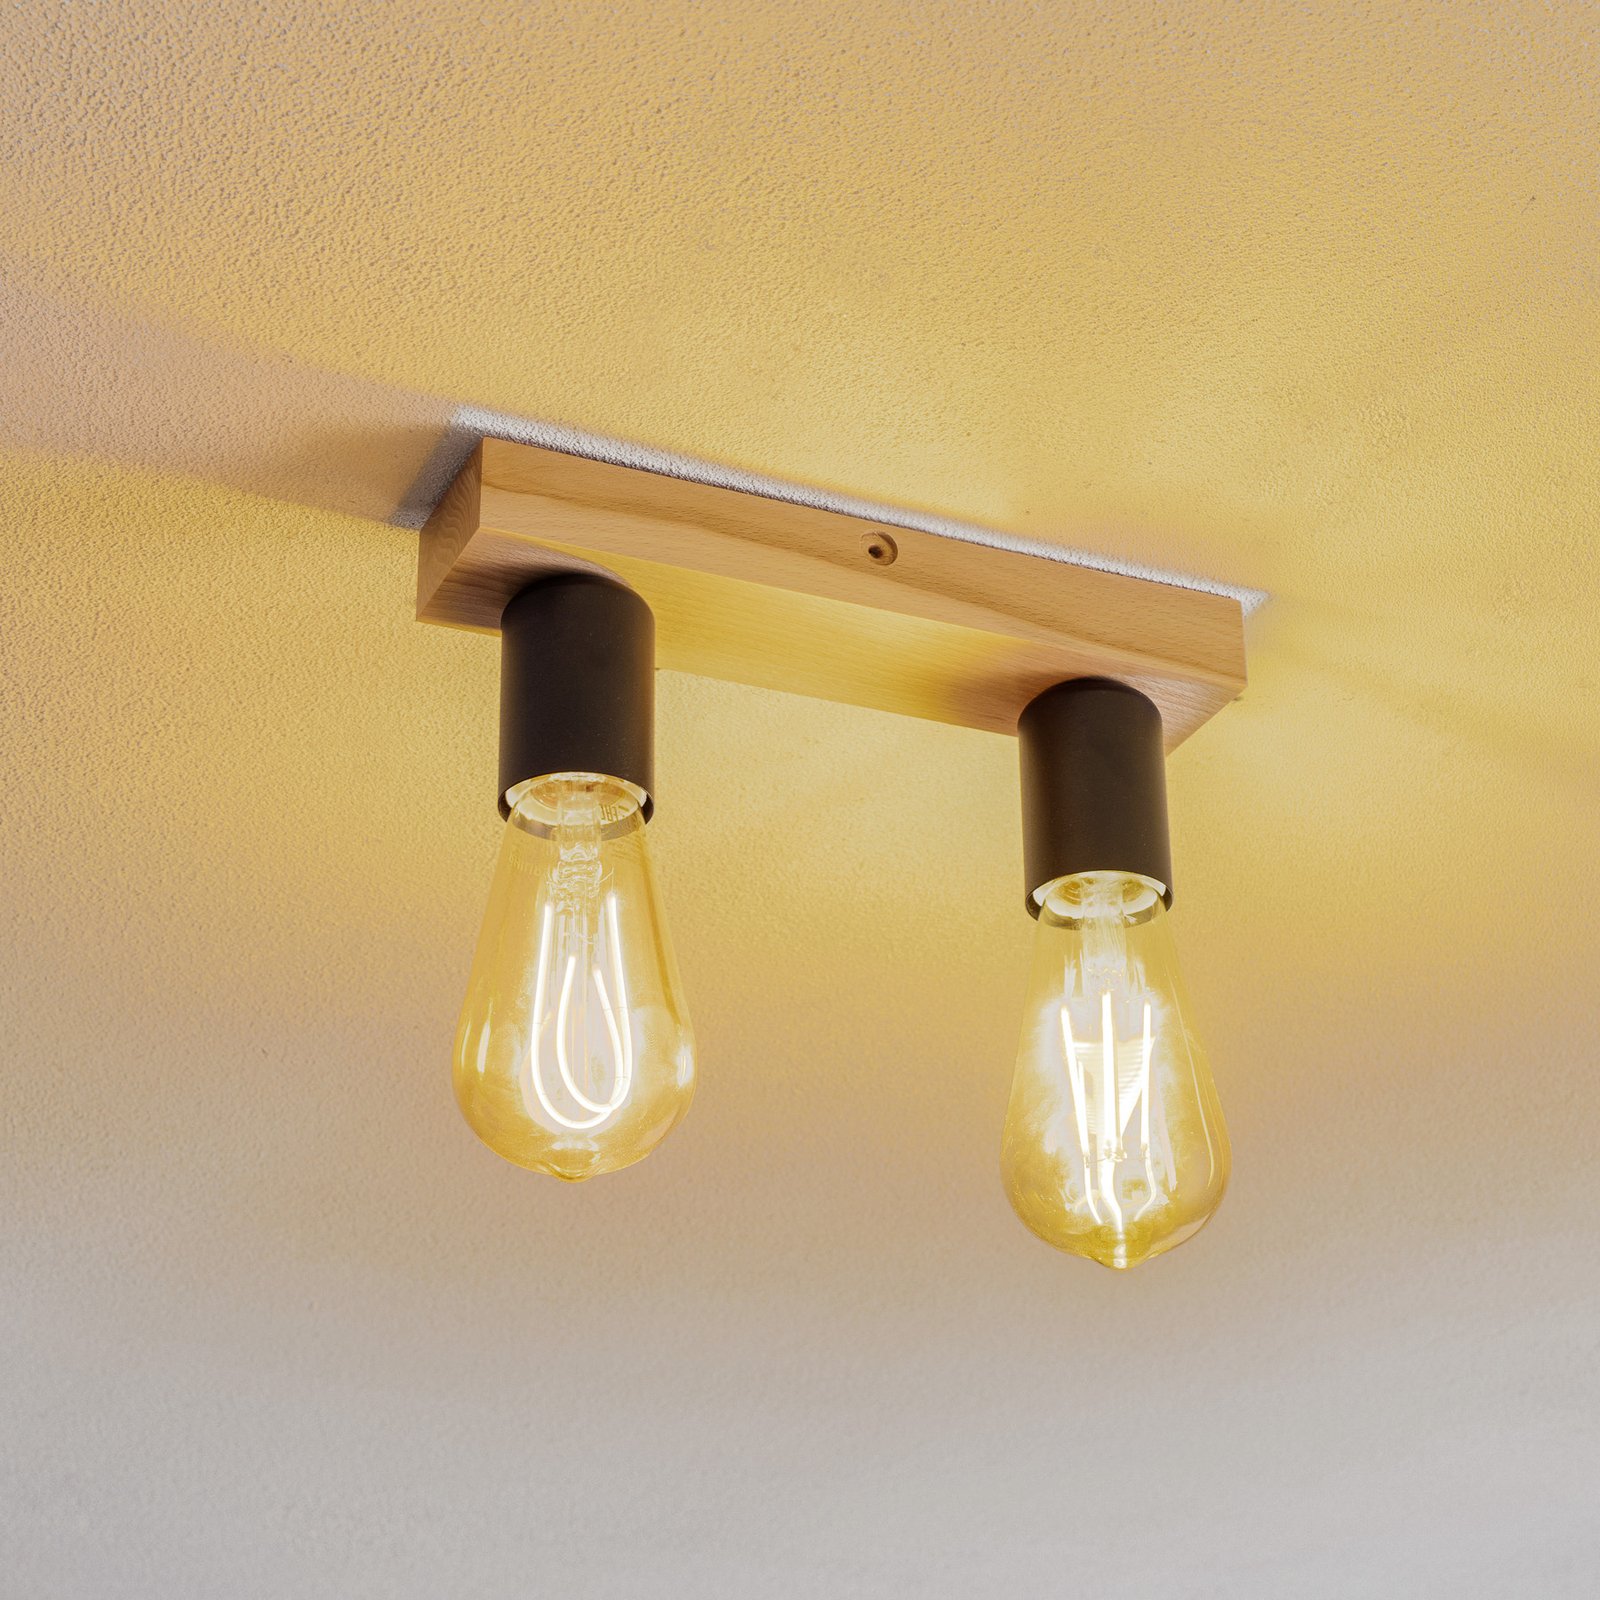 Envostar Esan ceiling light beech wood 2-bulb